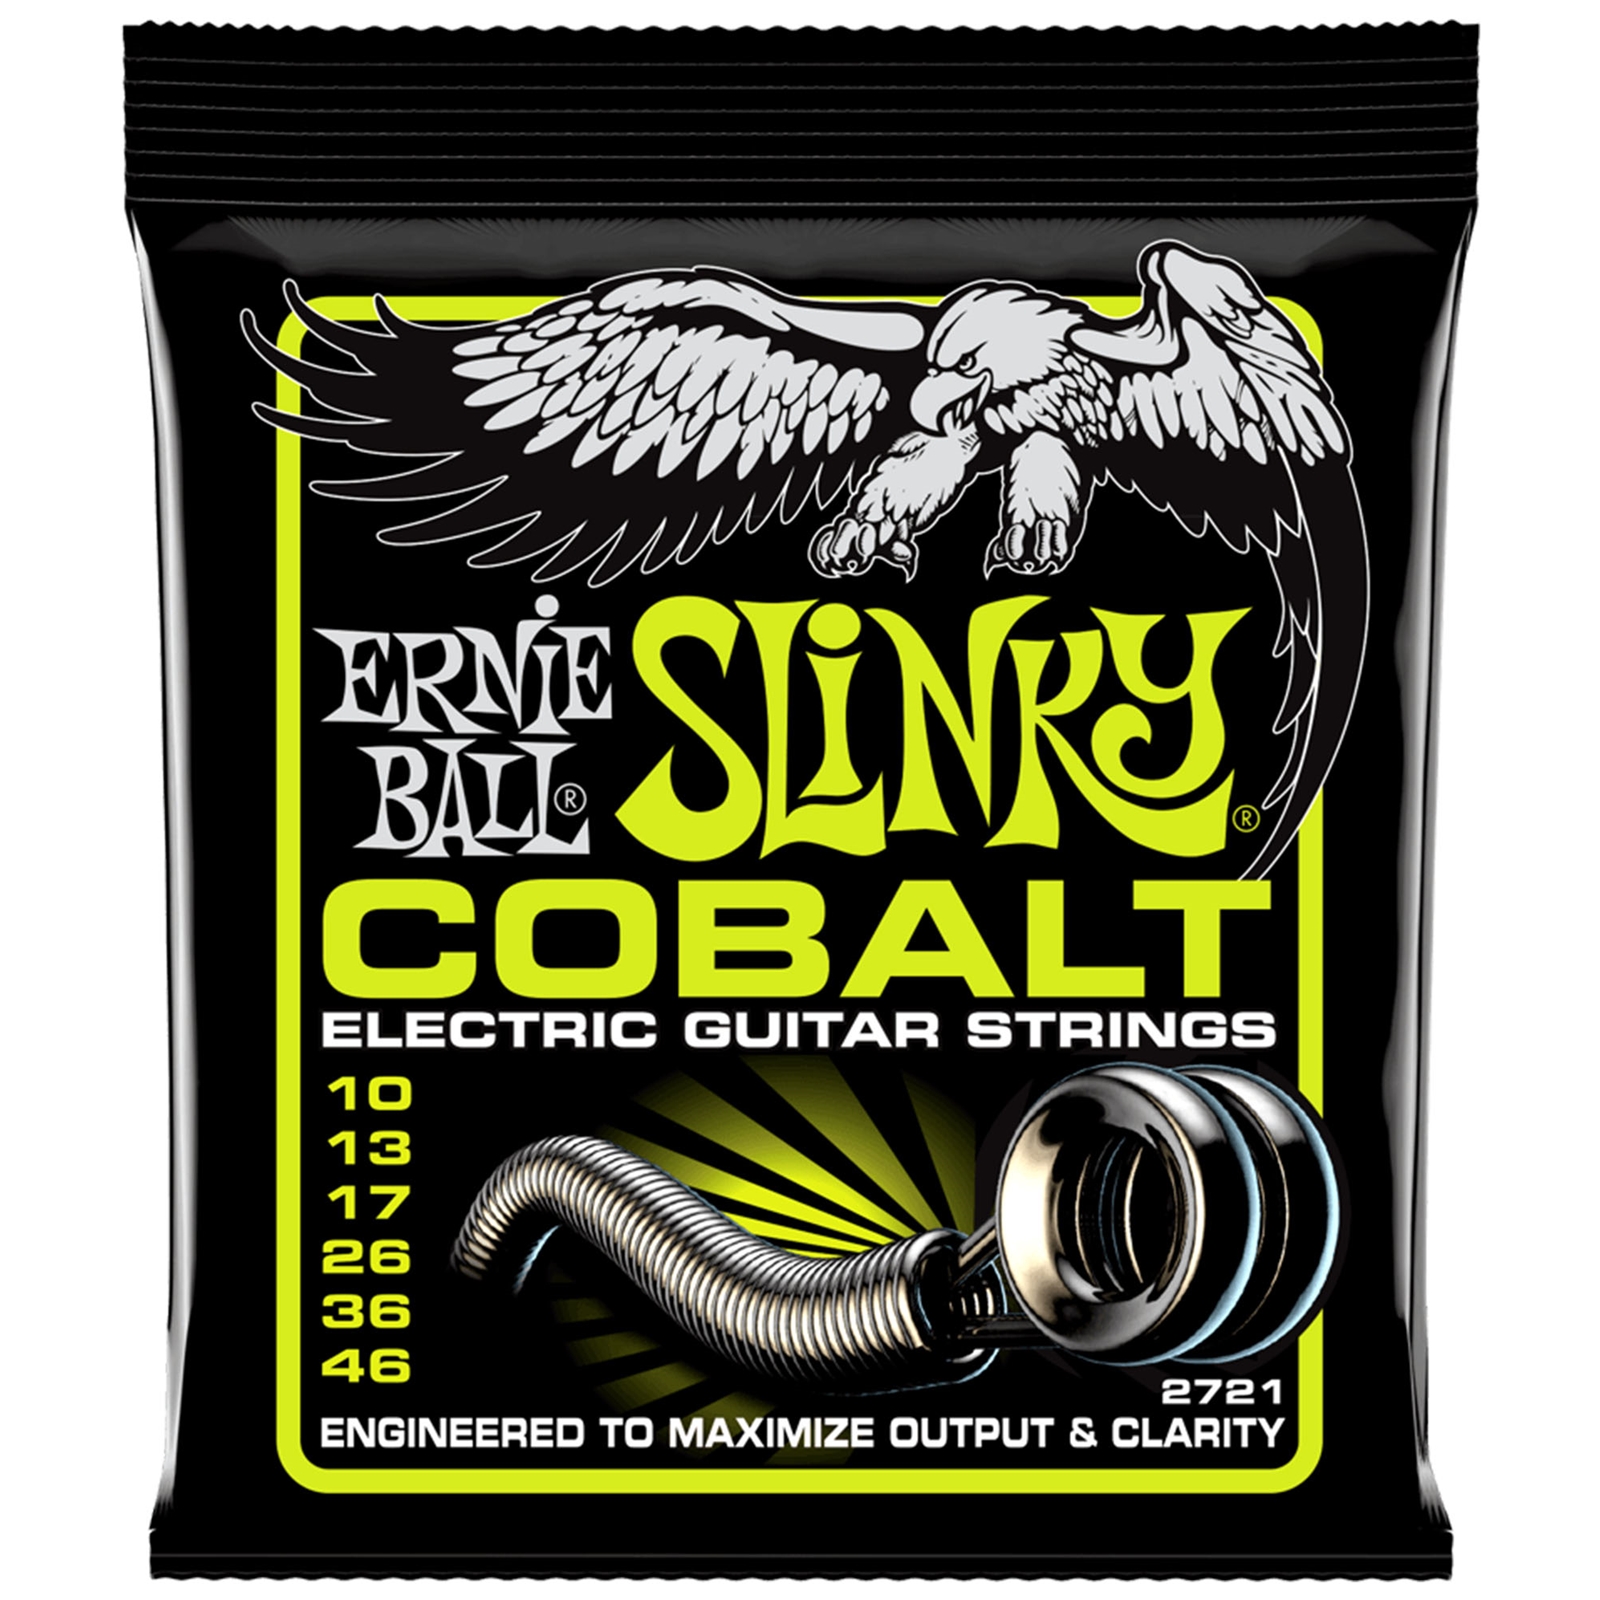 Ernie Ball Regular Slinky Cobalt Electric Guitar Strings 10-46 Gauge